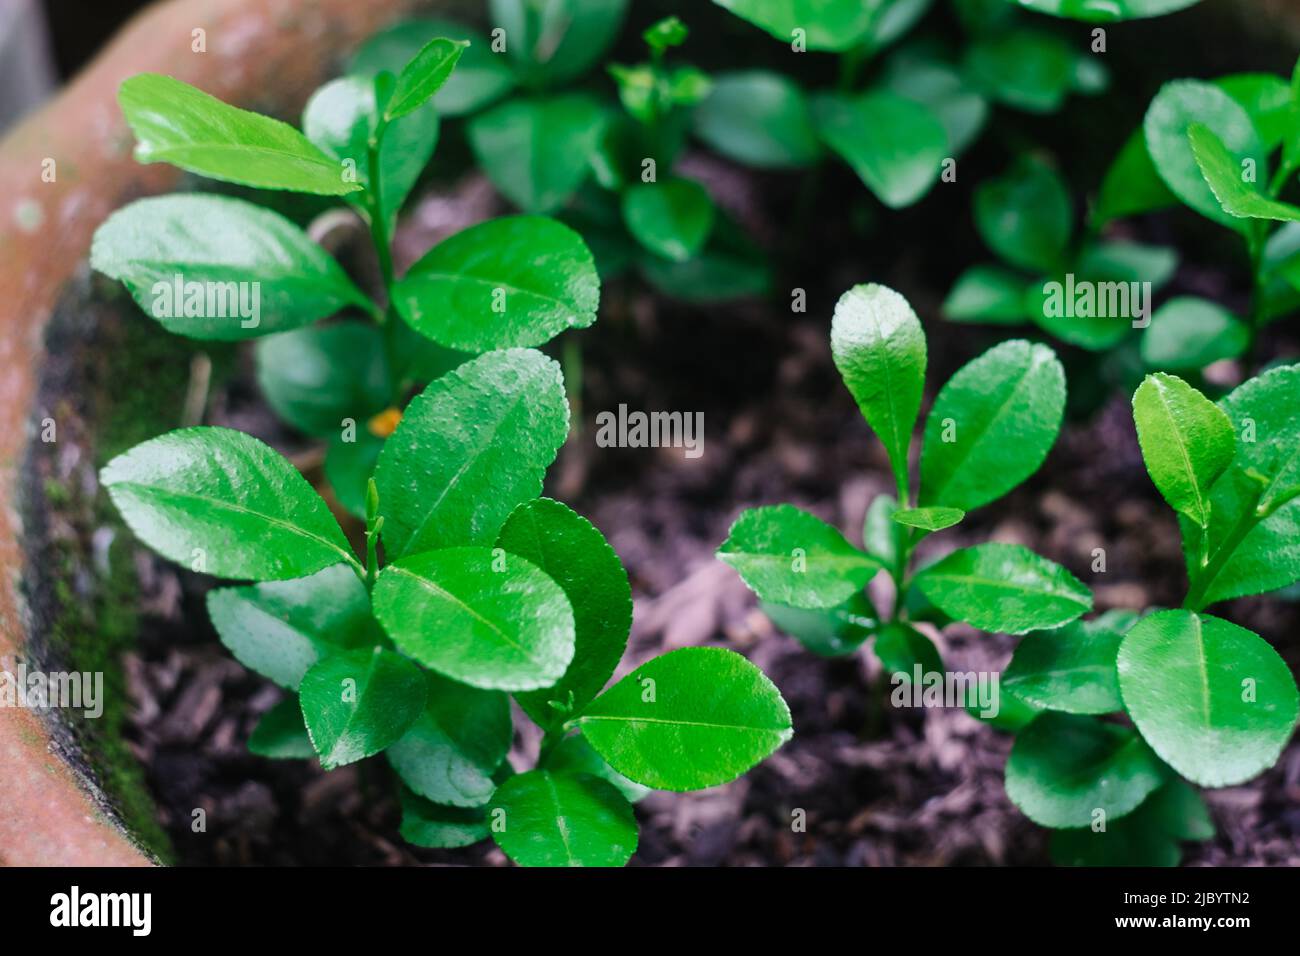 Closeup of growing organic lemon seedlings on clay pot. Selective focus. Stock Photo